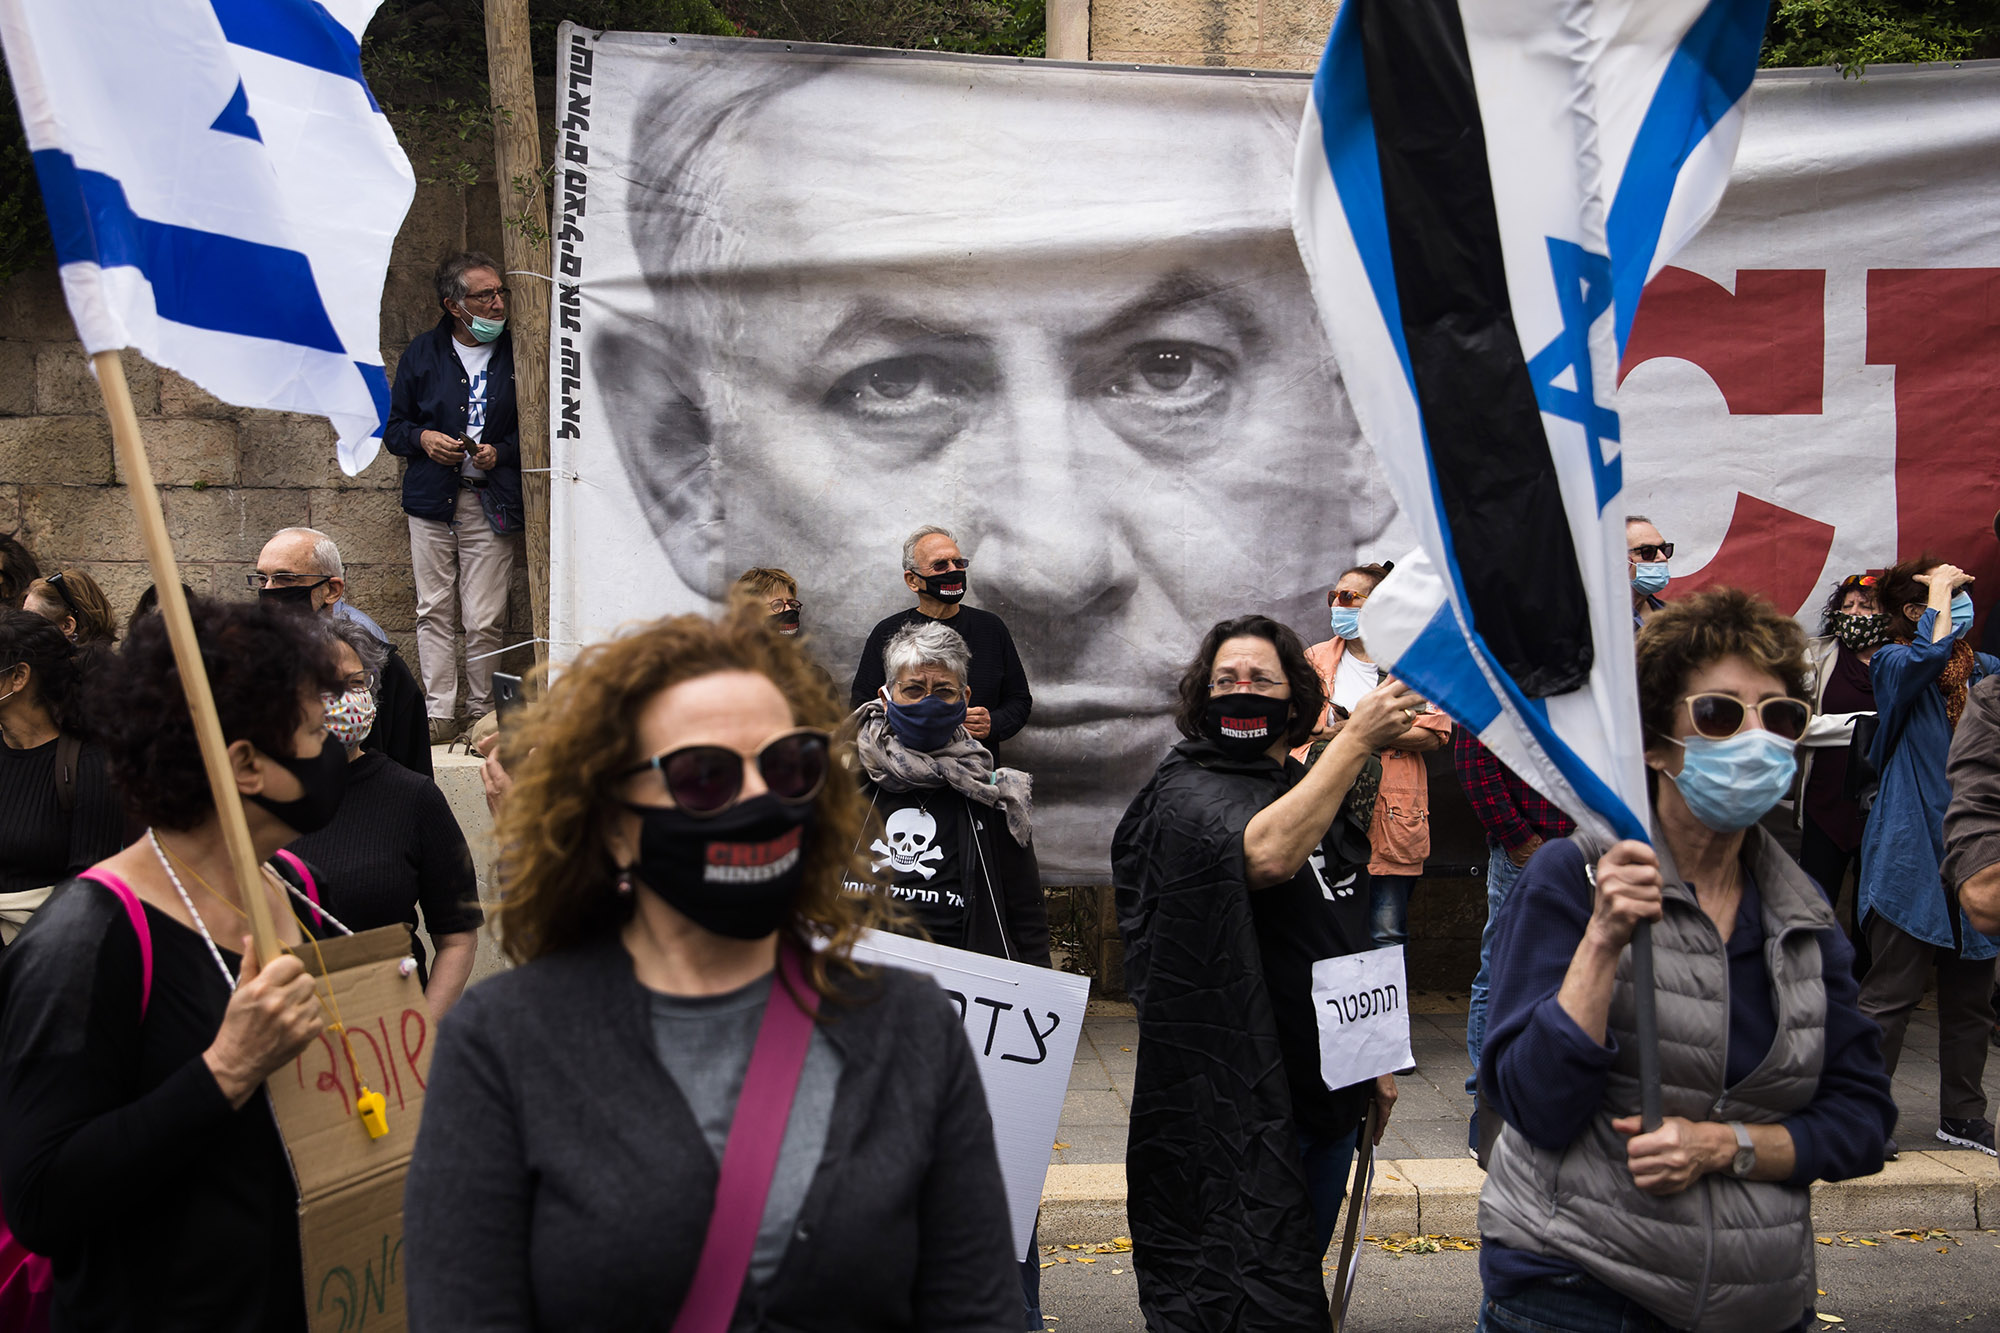 Netanyahu Bribery Trial Heads Into High Gear, TV Says - Bloomberg